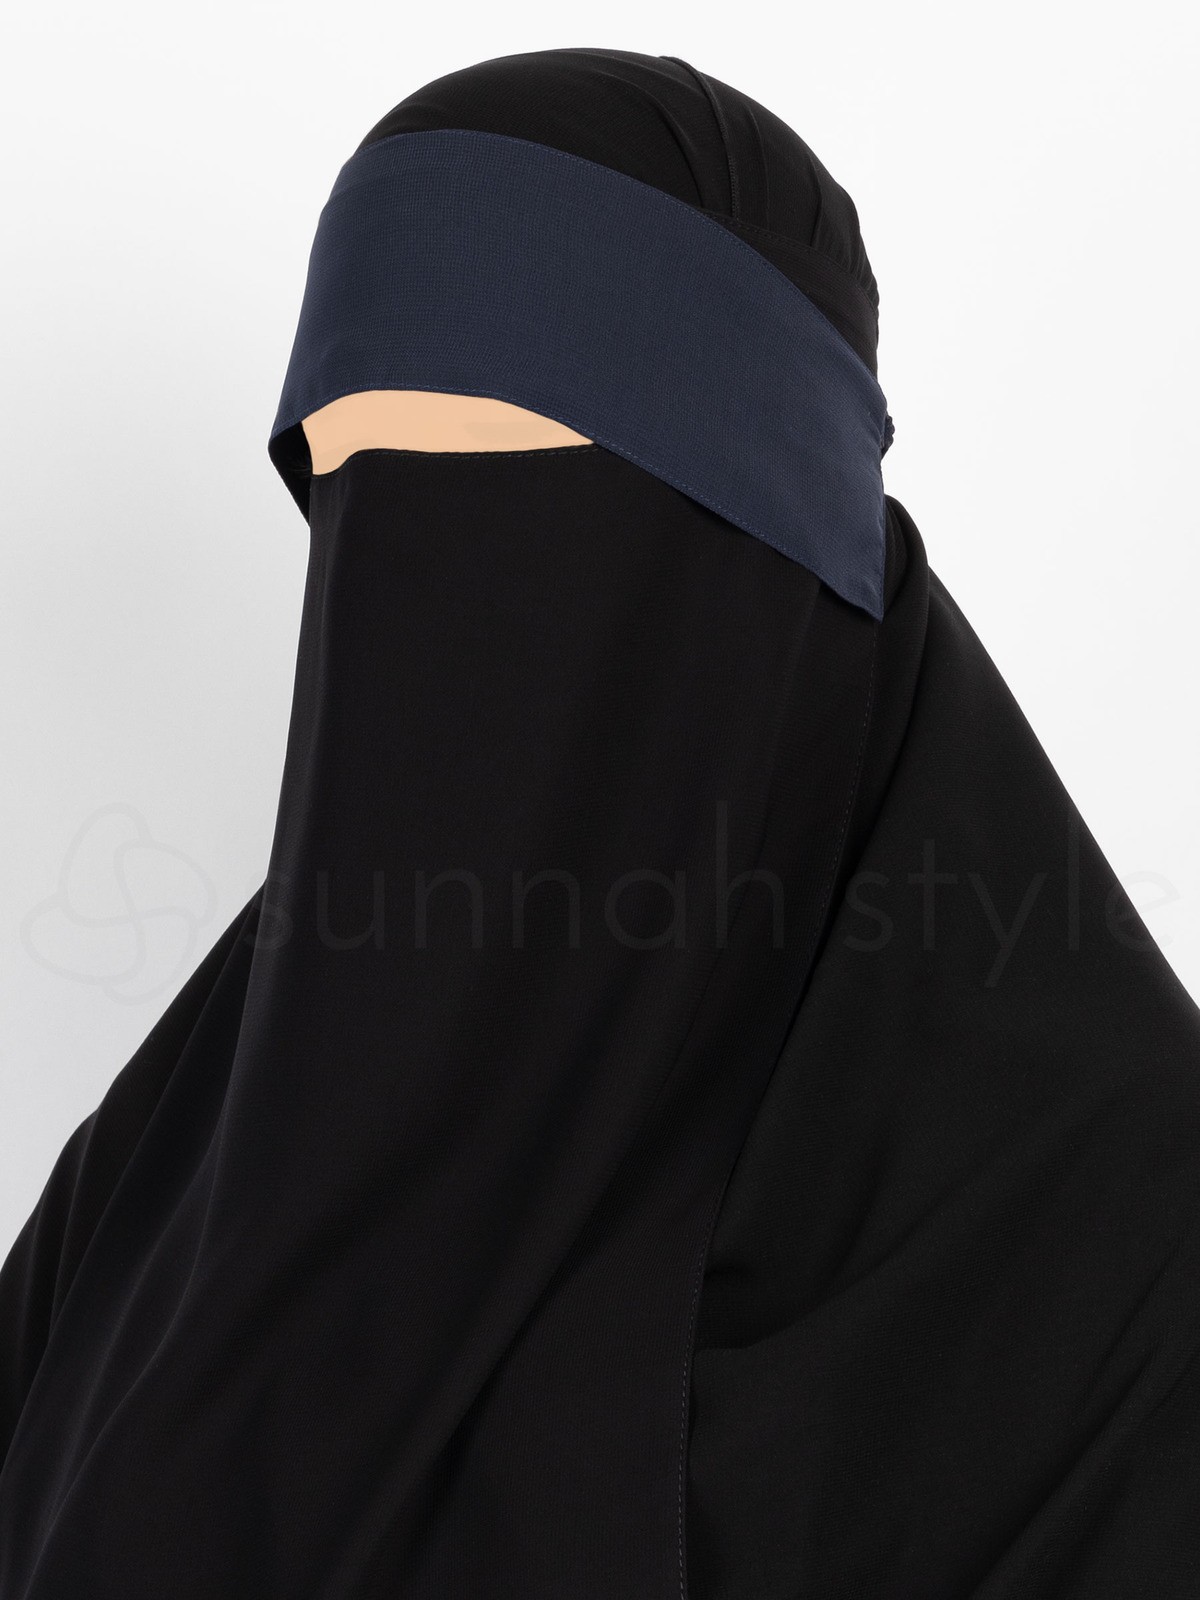 Sunnah Style - Adjustable Niqab Flap (Navy Blue)